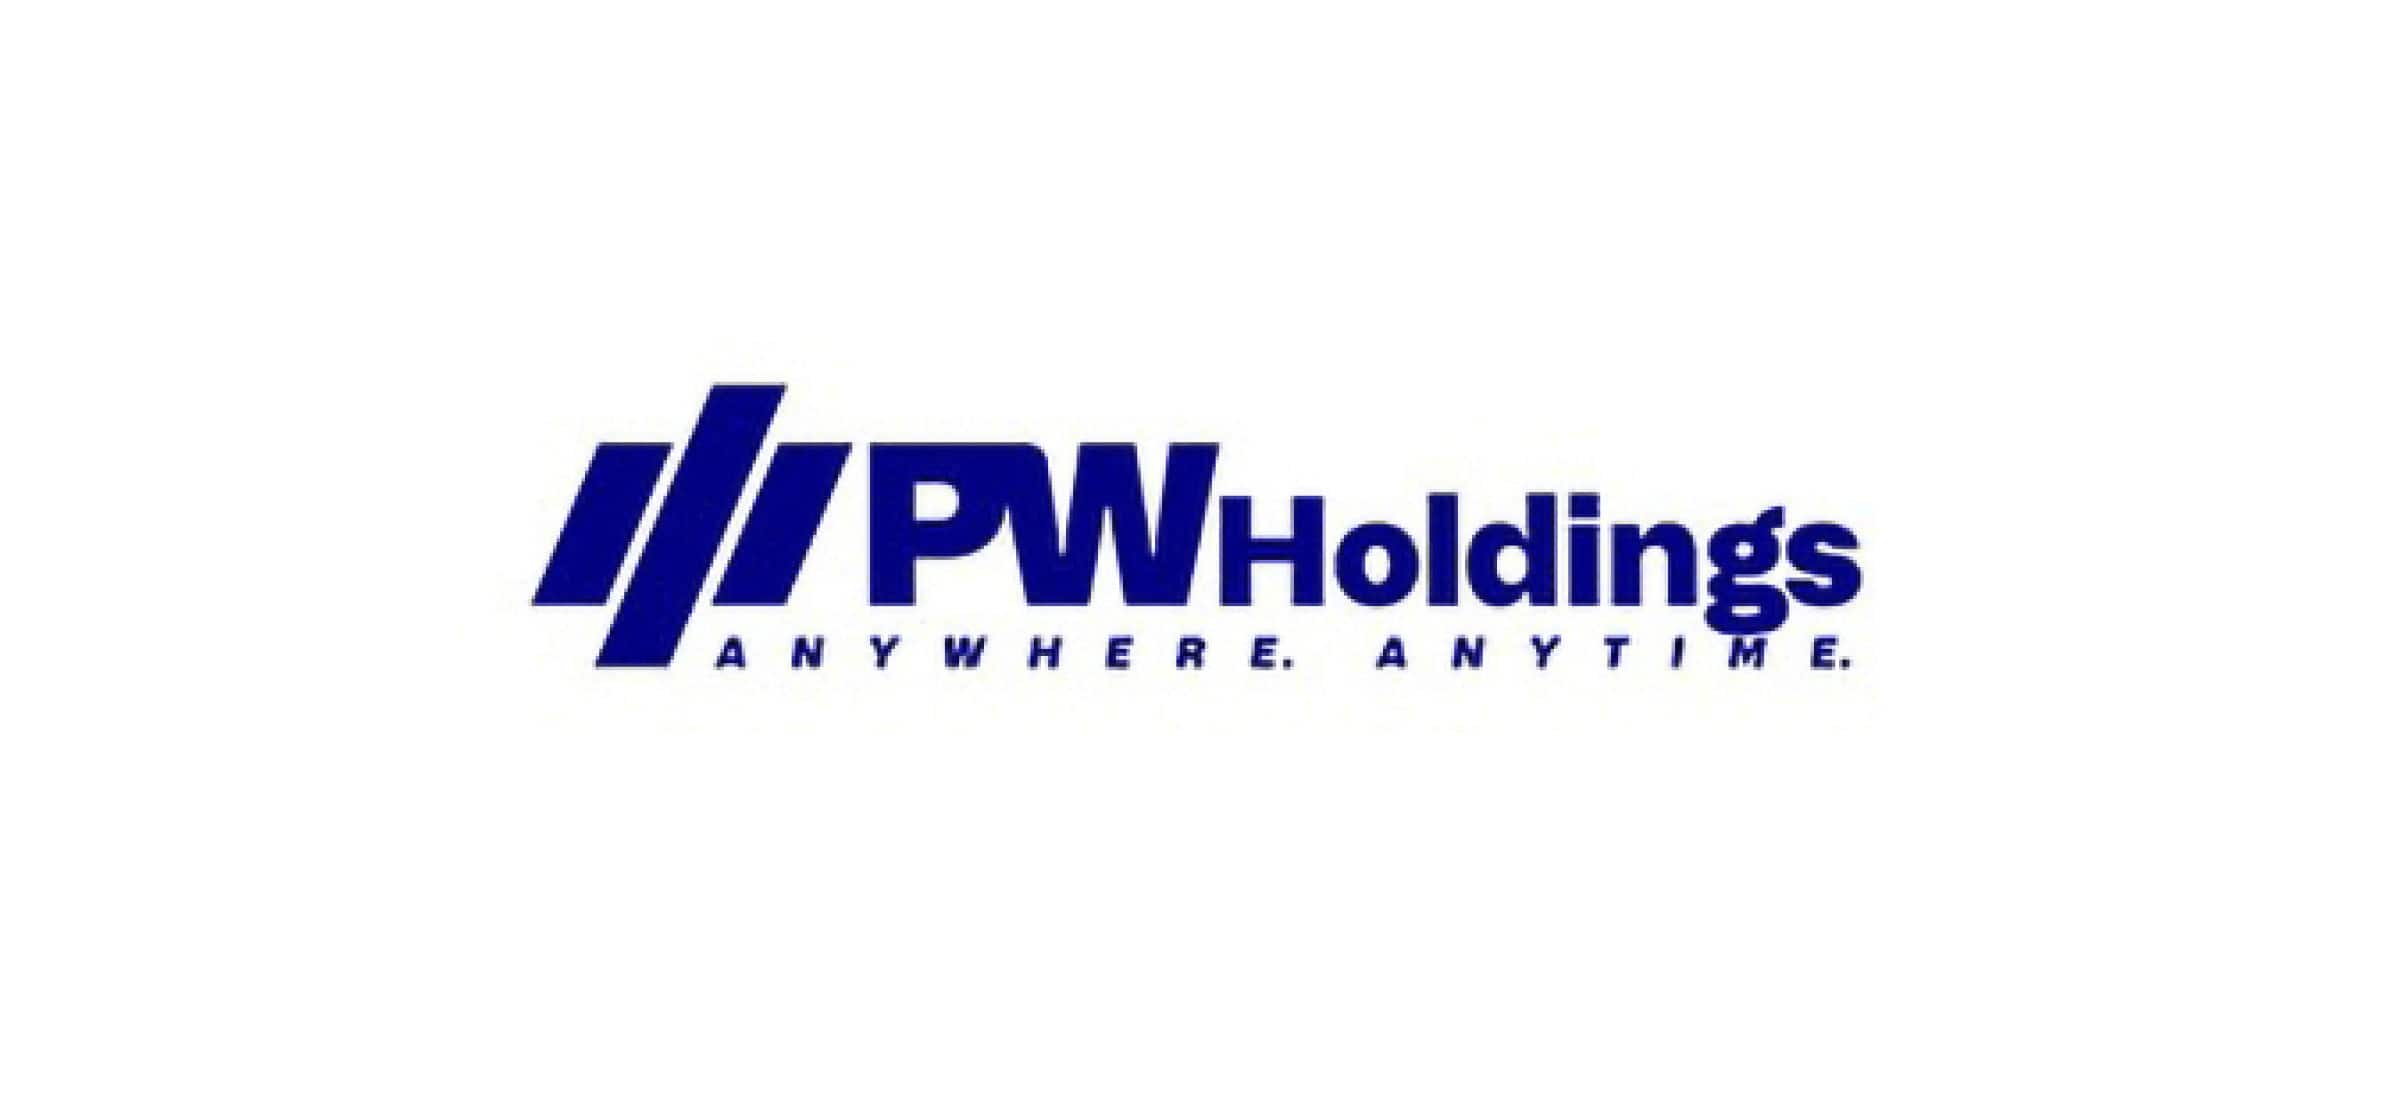 P W Holdings logo